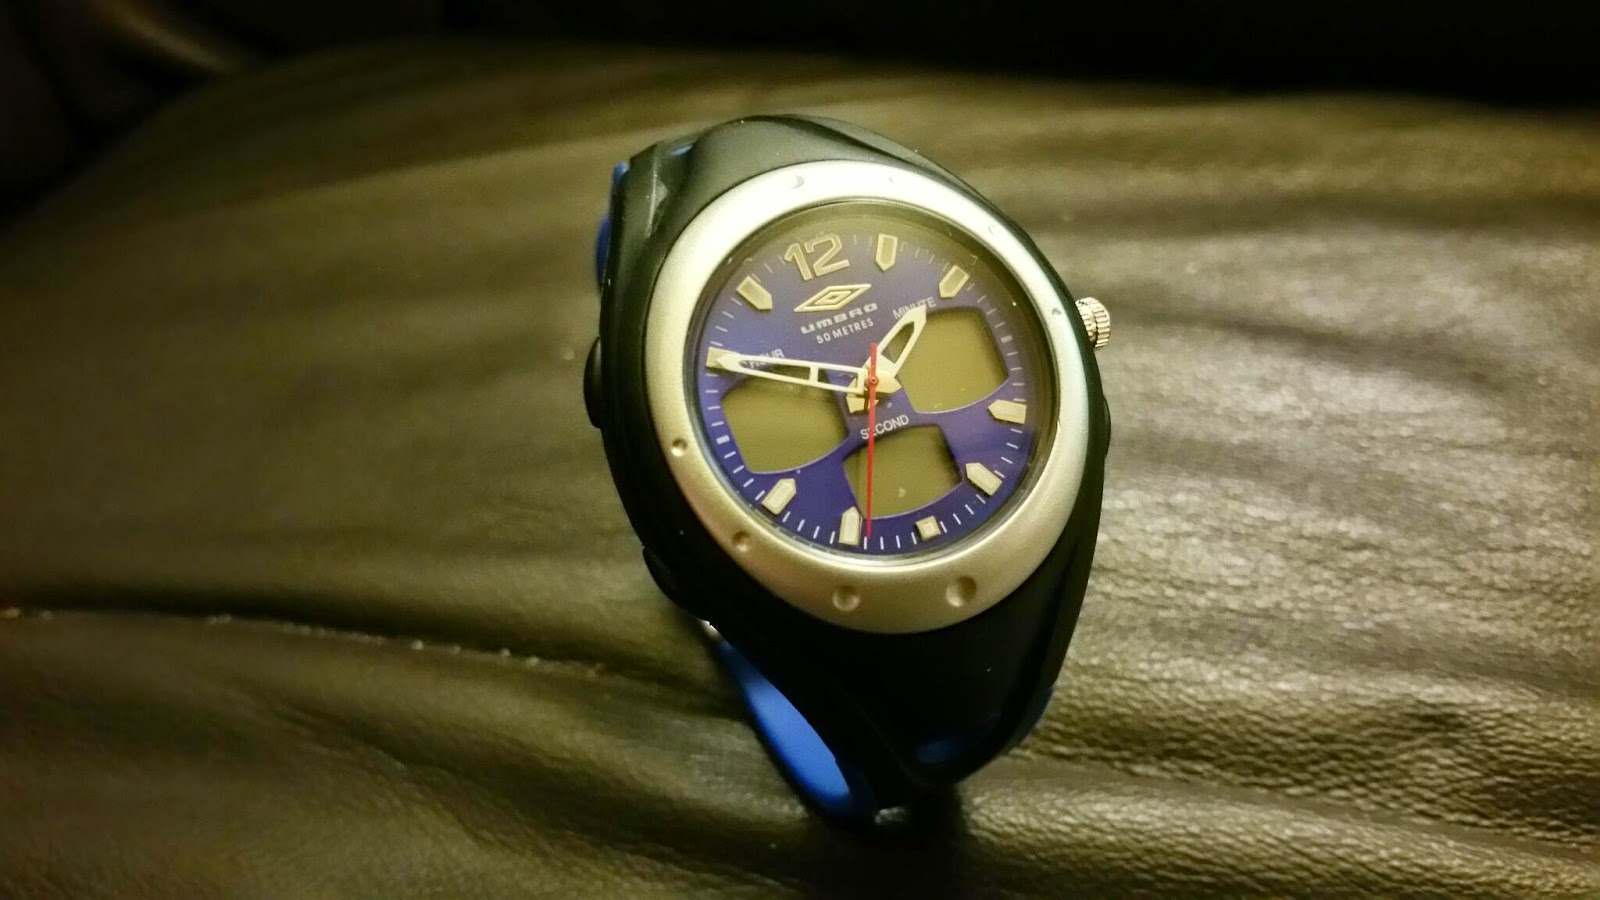 Umbro A430 Ana-Digi watch - Which Watch Today...